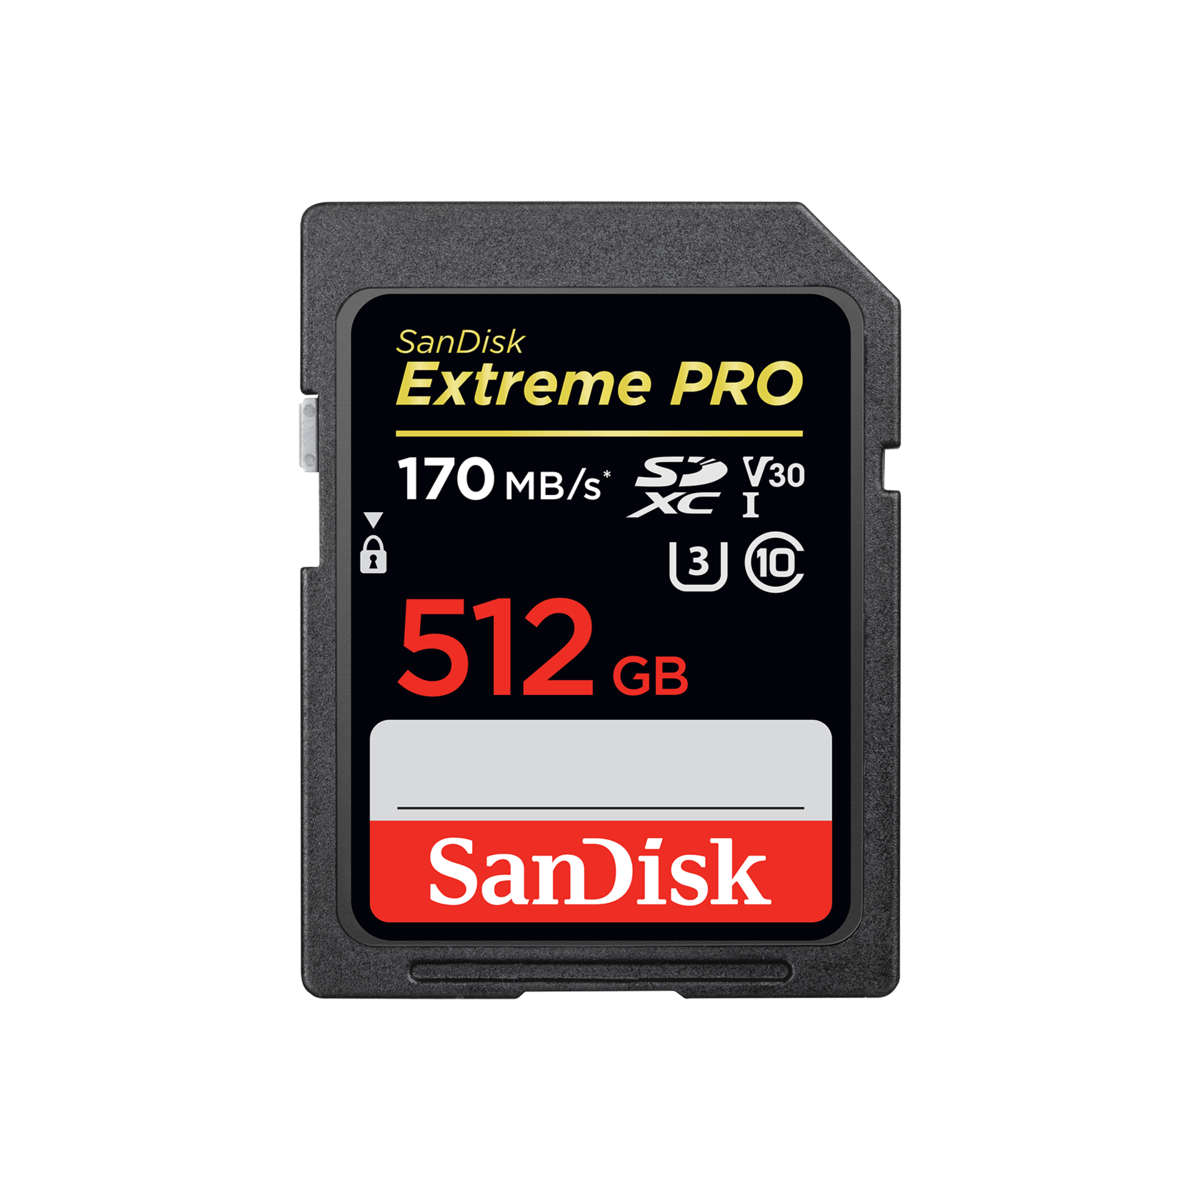 U3 Classe 10 V30 Velocità di Lettura fino a 170 MB/s SanDisk Extreme PRO Scheda di Memoria SDXC da 512 GB